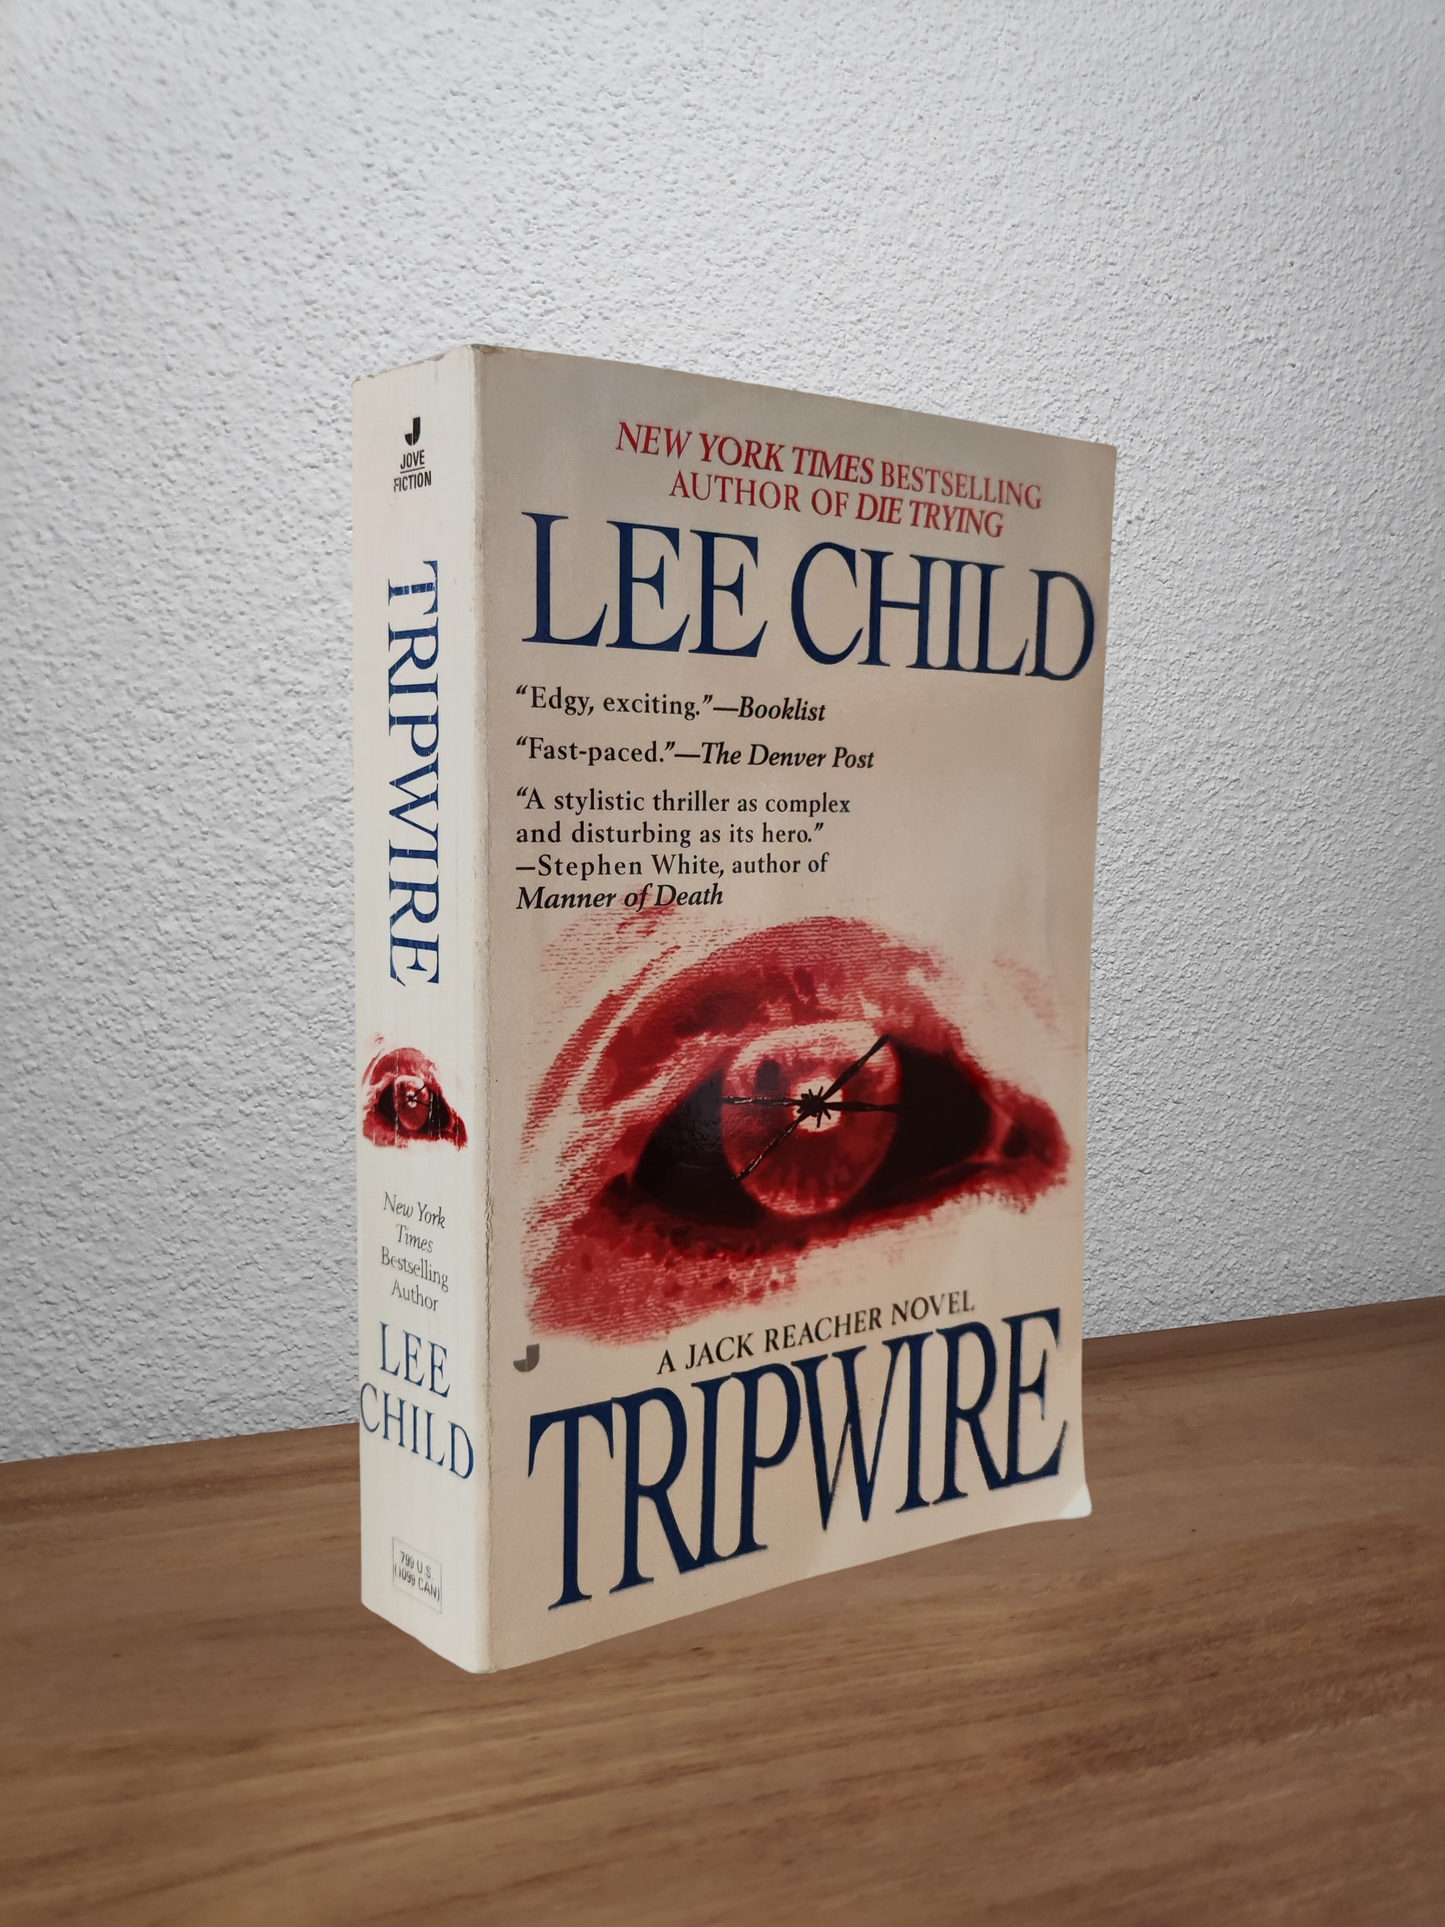 Lee Child - Tripwire (Jack Reacher #3)